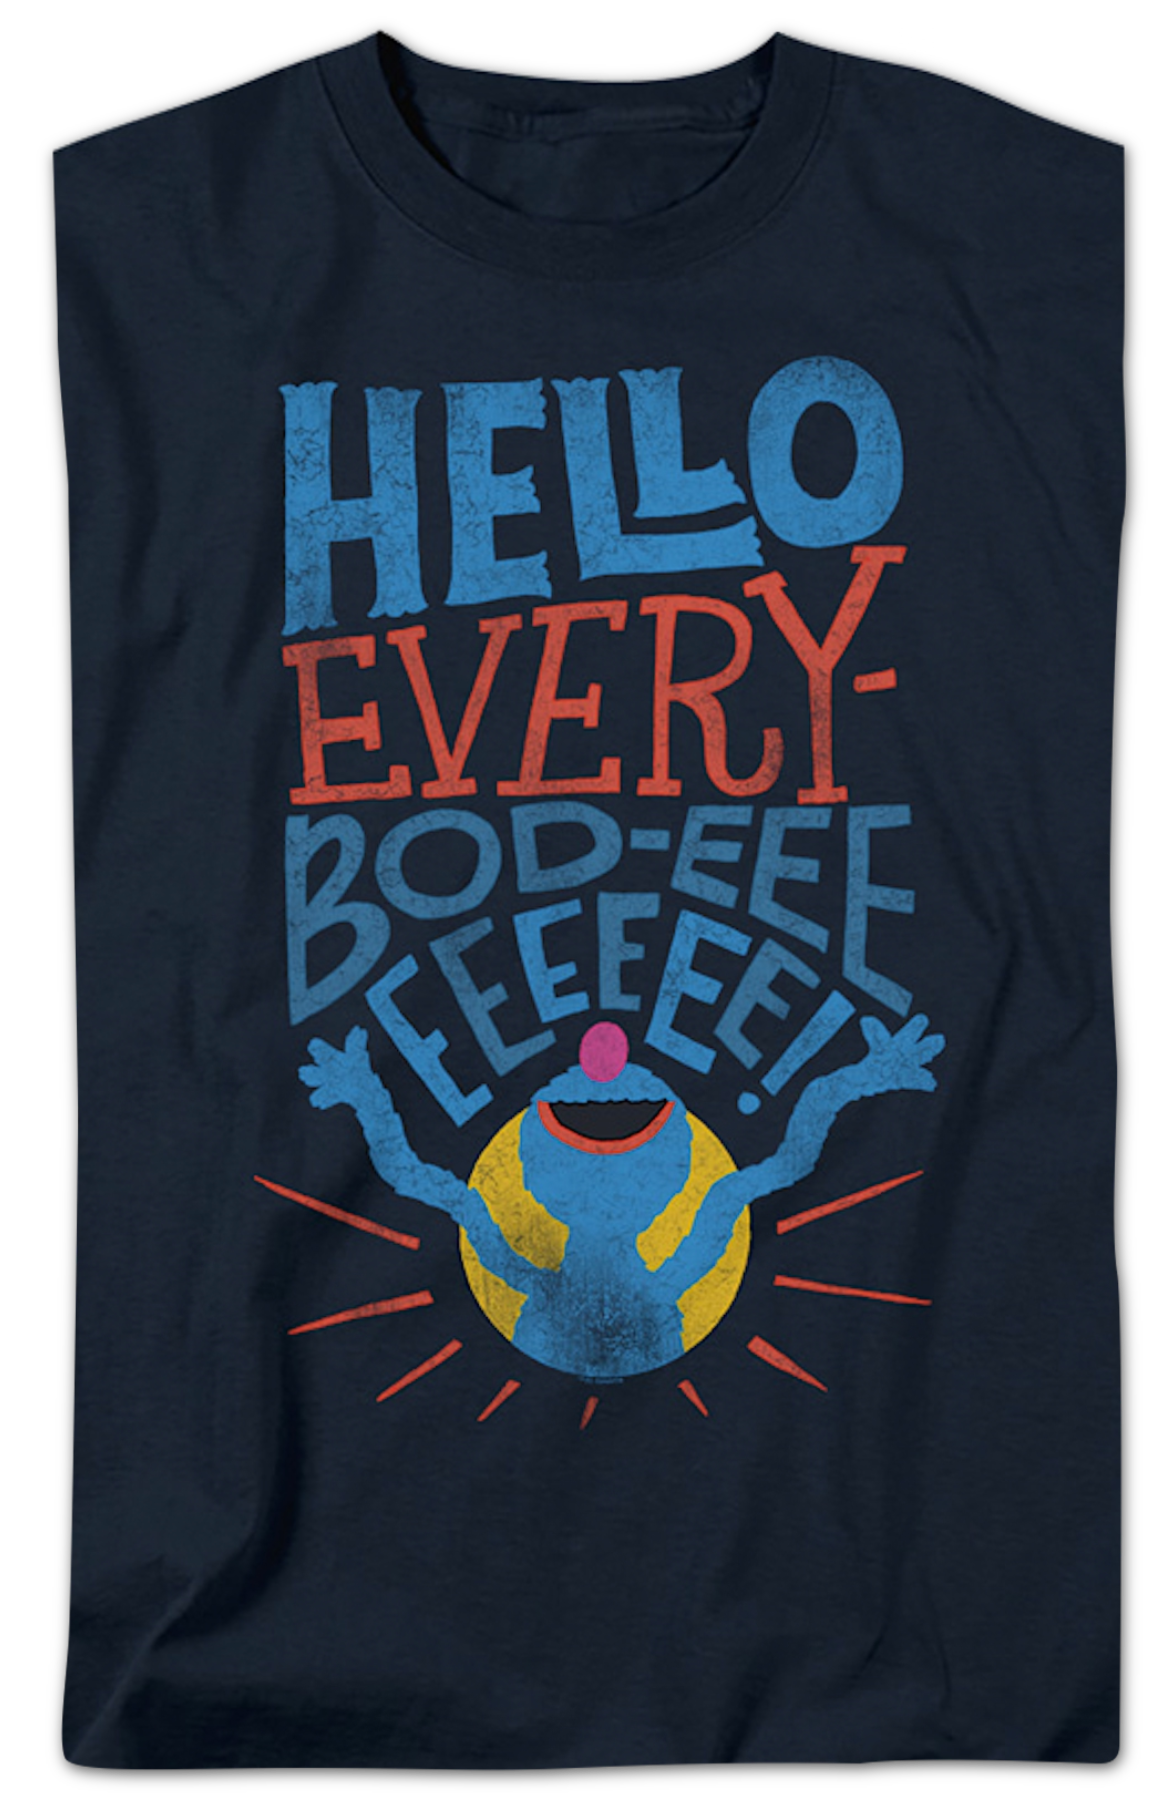 Grover Hello Sesame Street T-Shirt